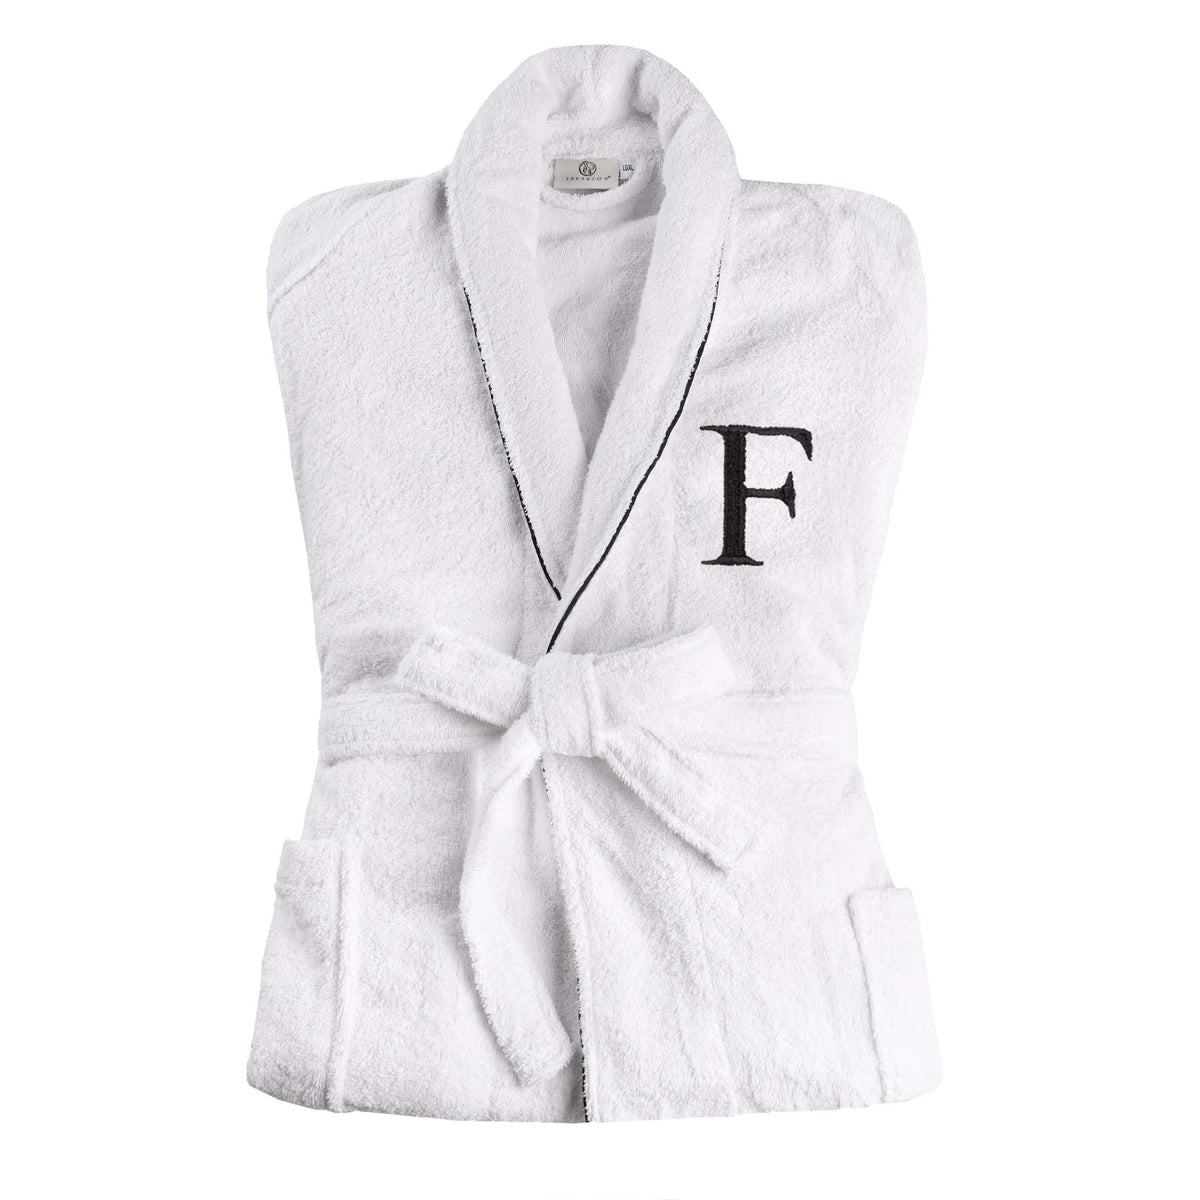 Cotton Adult Unisex Embroidered Fluffy Bathrobe White - Letter F